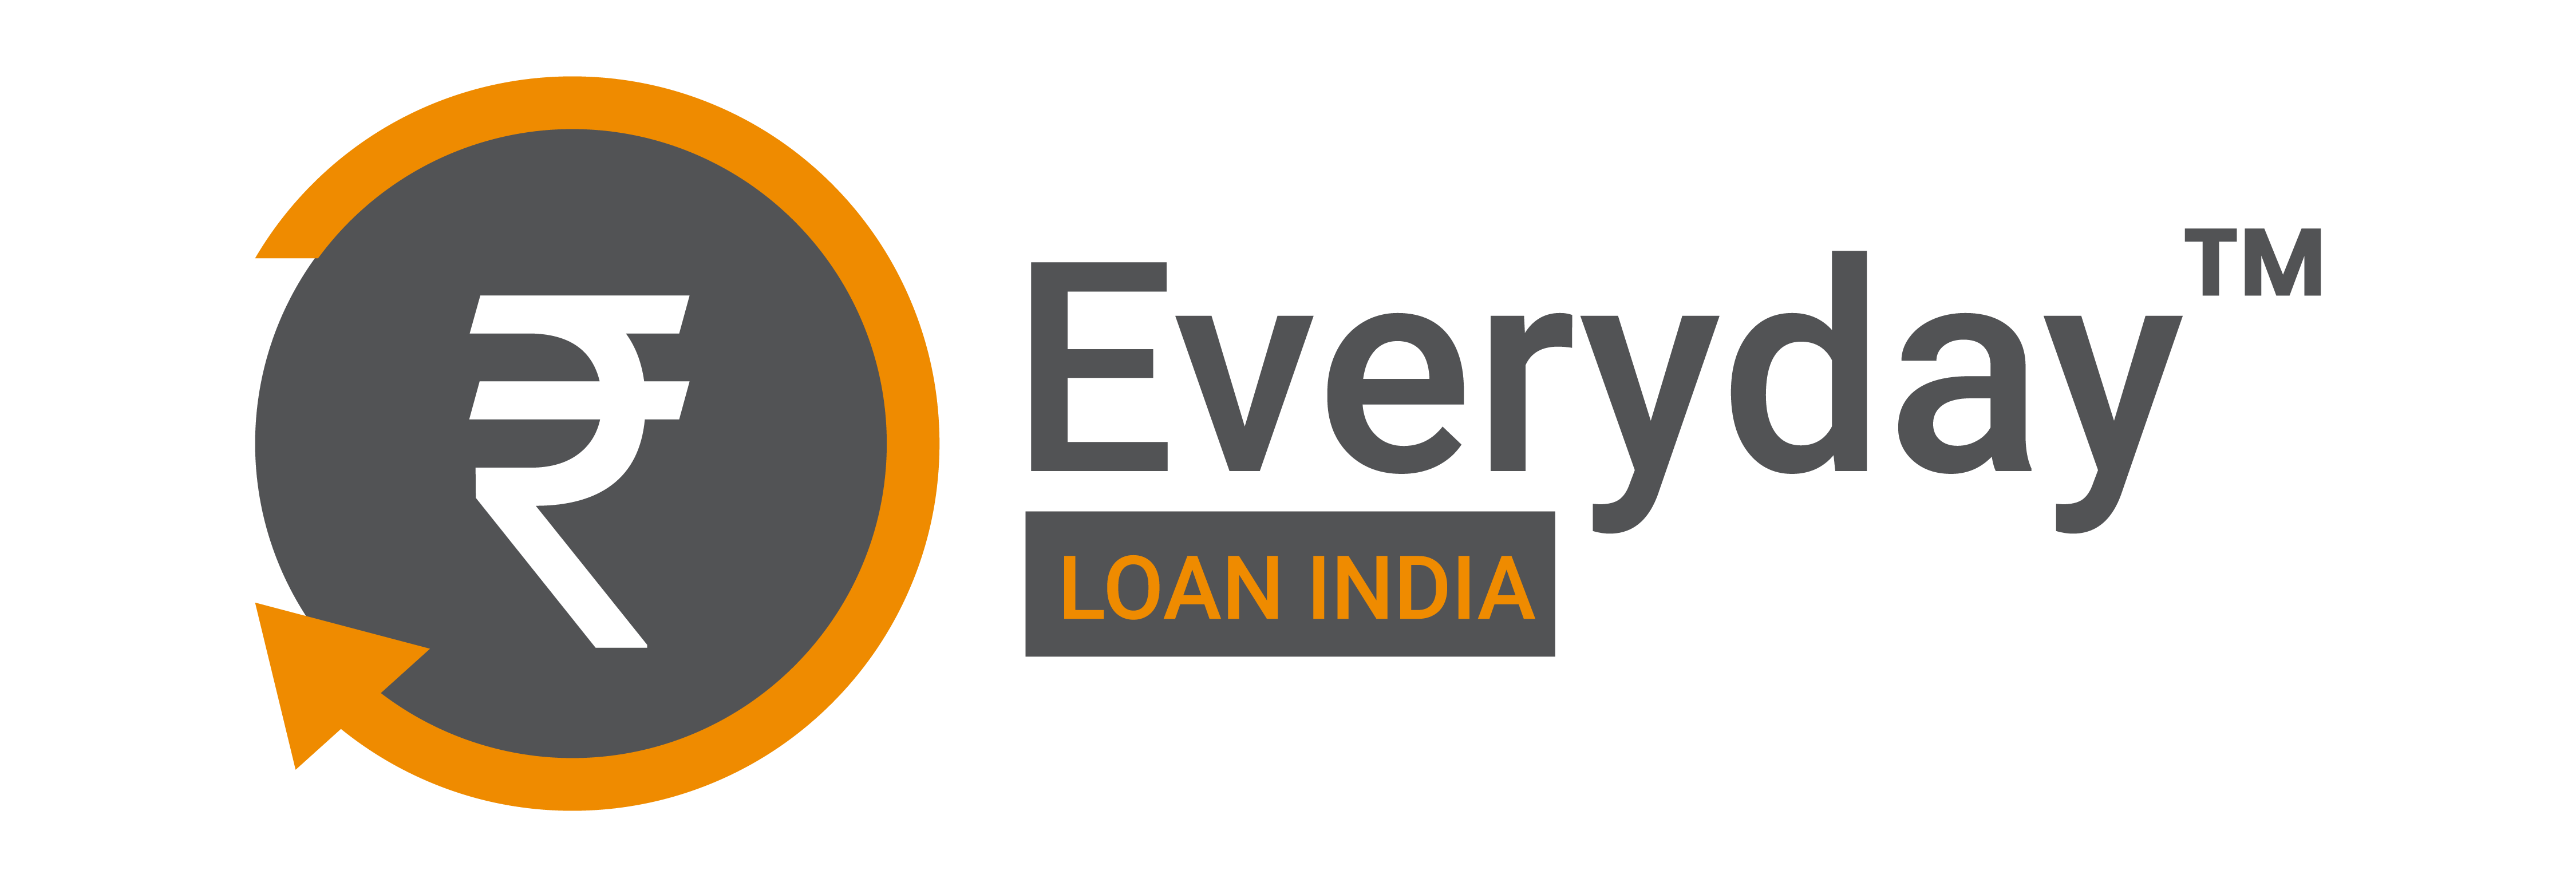 Personal Loan in Mumbai - Delhi Other